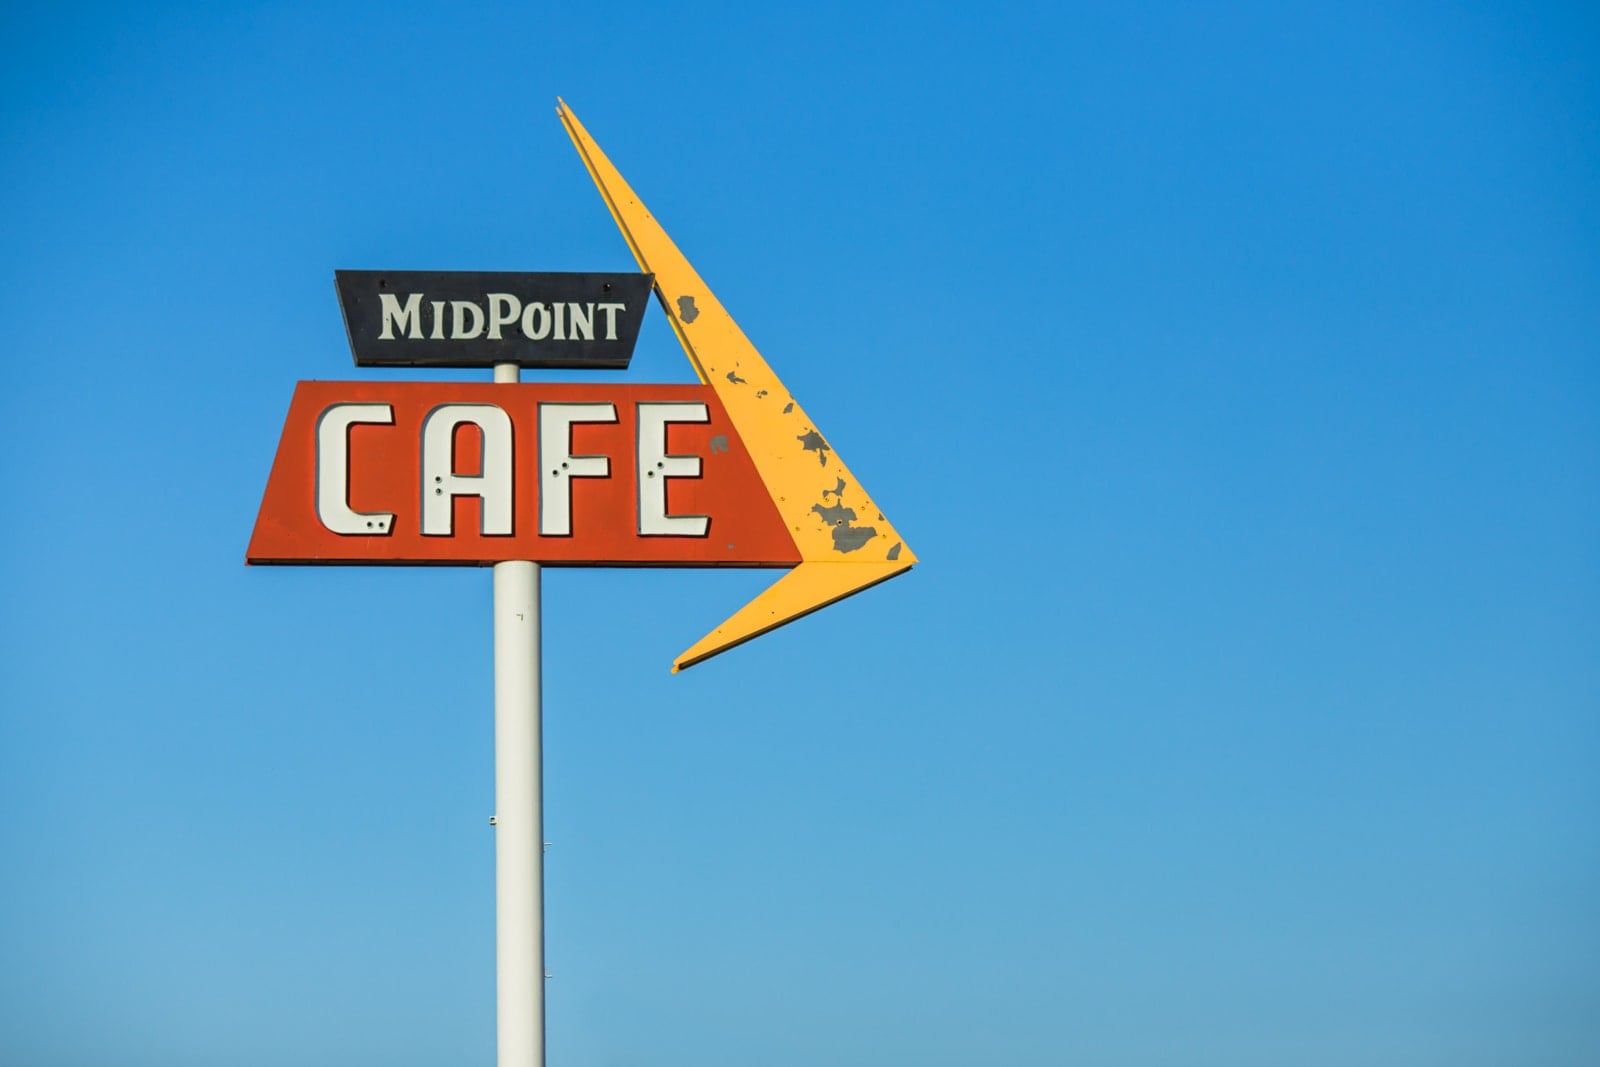 Midpoint Cafe vintage road sign